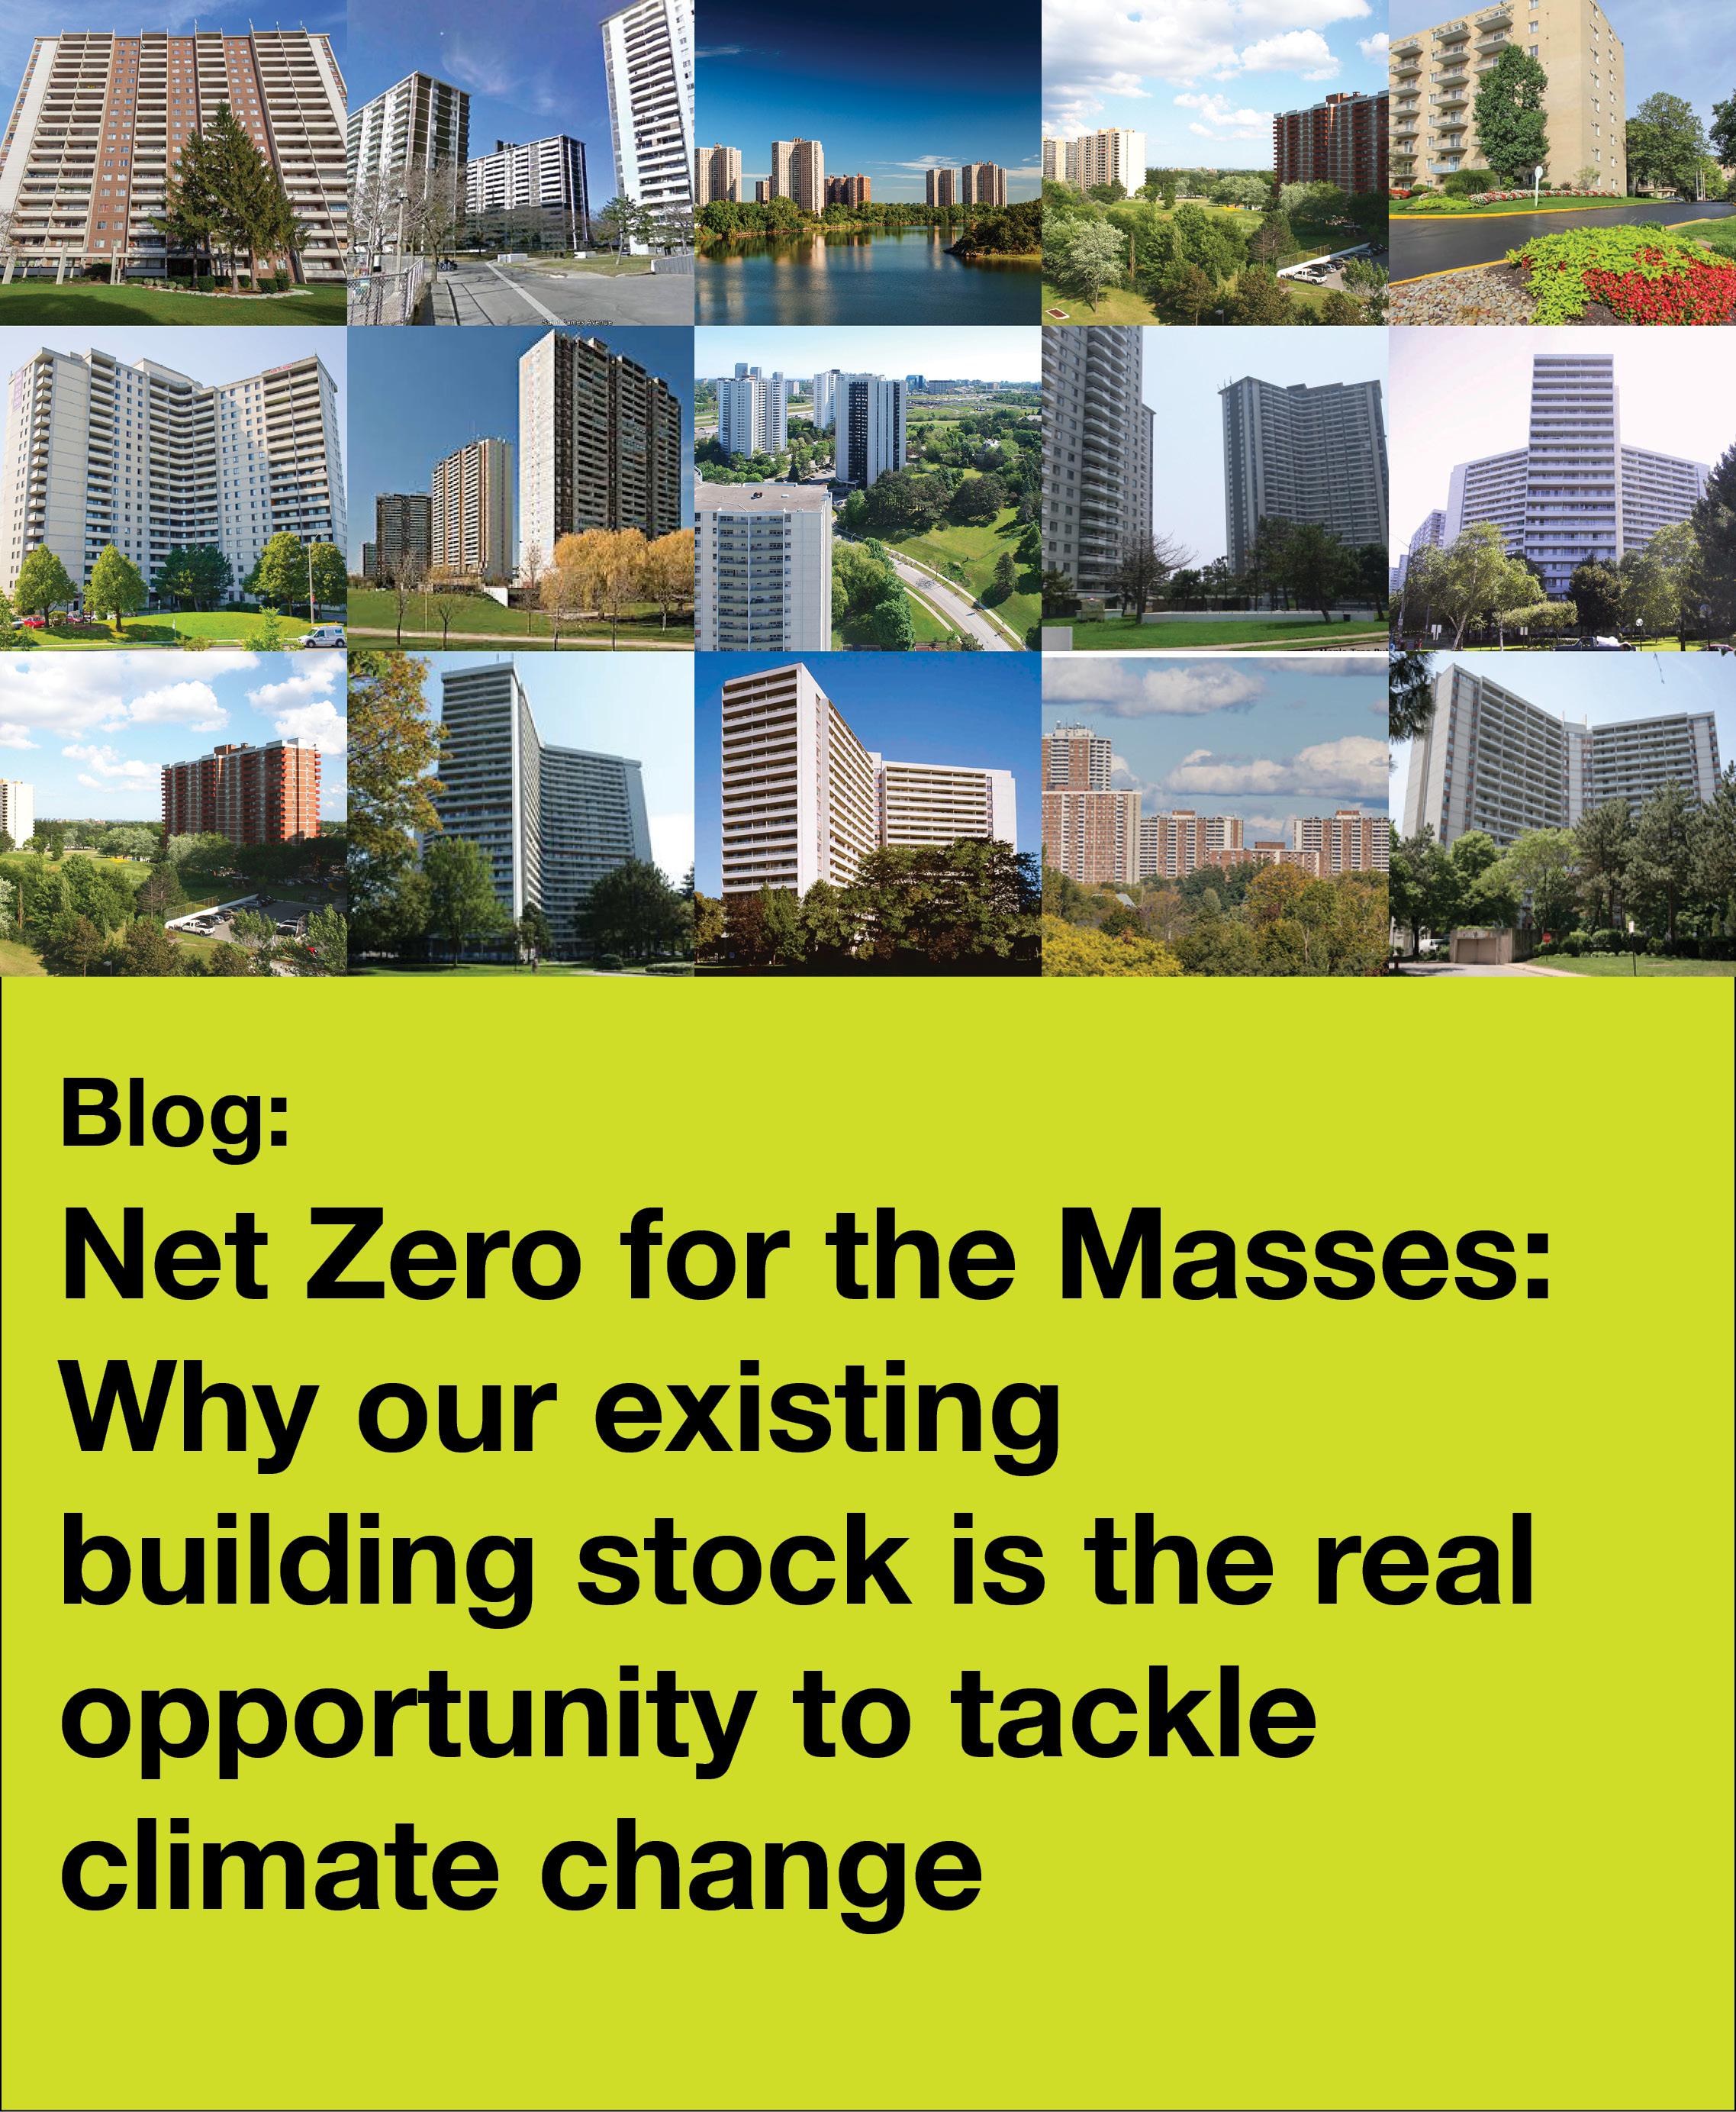 Net Zero for the Masses